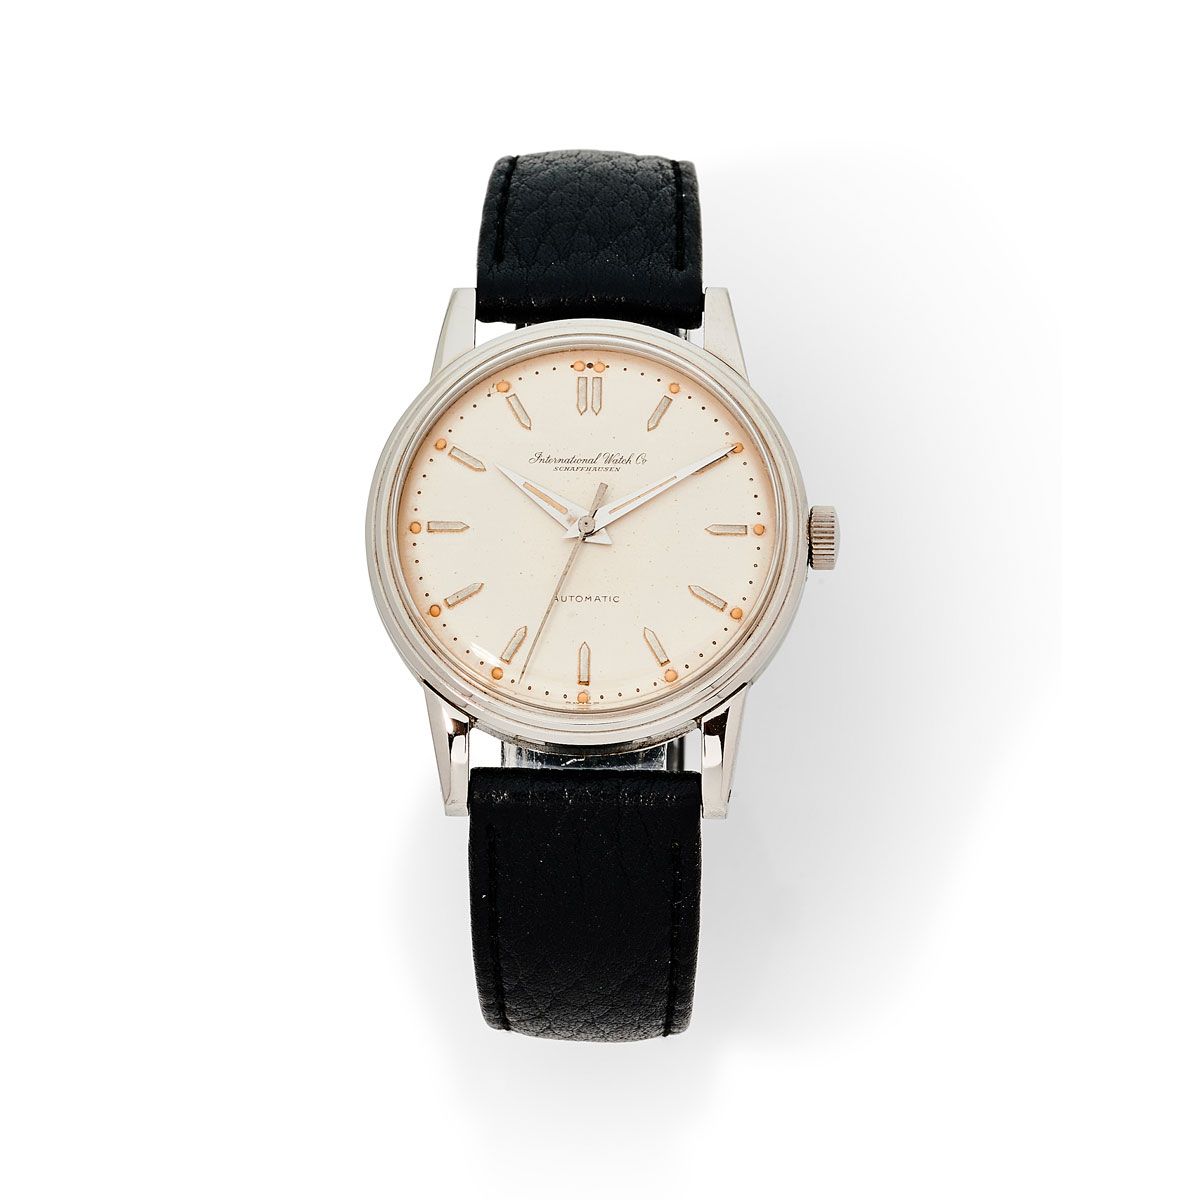 Null International Watch Co, nº 1382675, alrededor de 1955.

Fino reloj clásico &hellip;